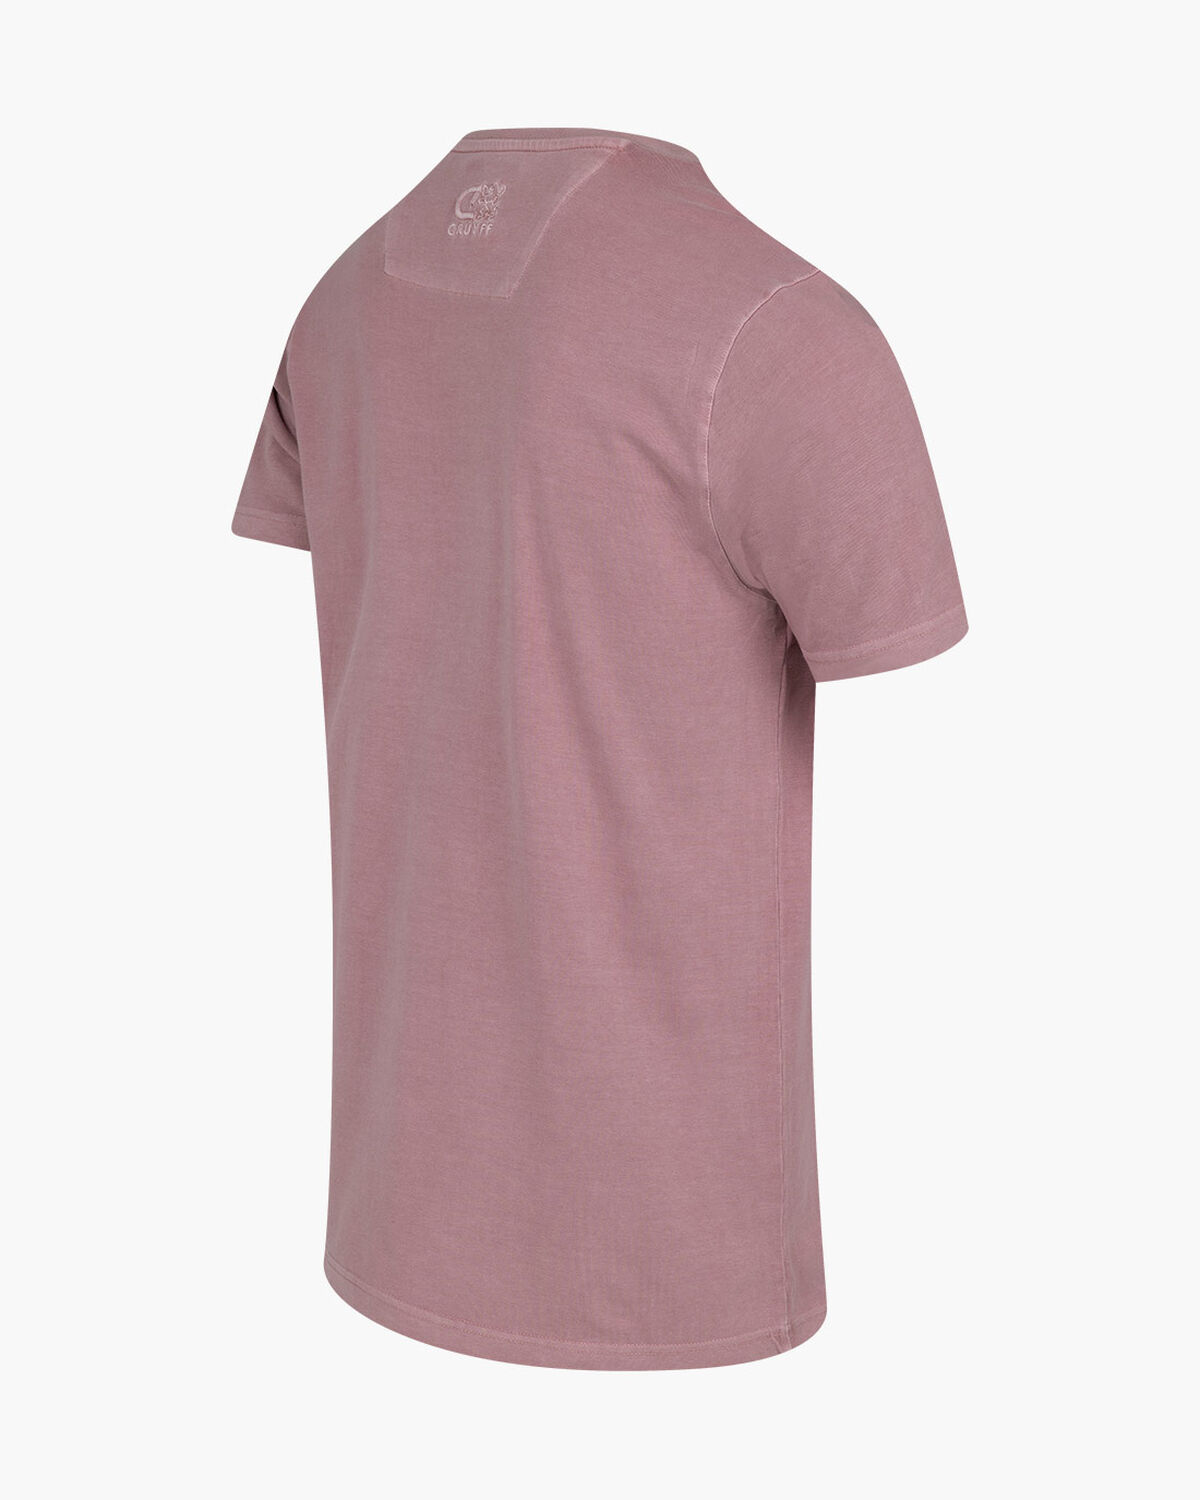 Eduardo T-shirt, Pink, hi-res